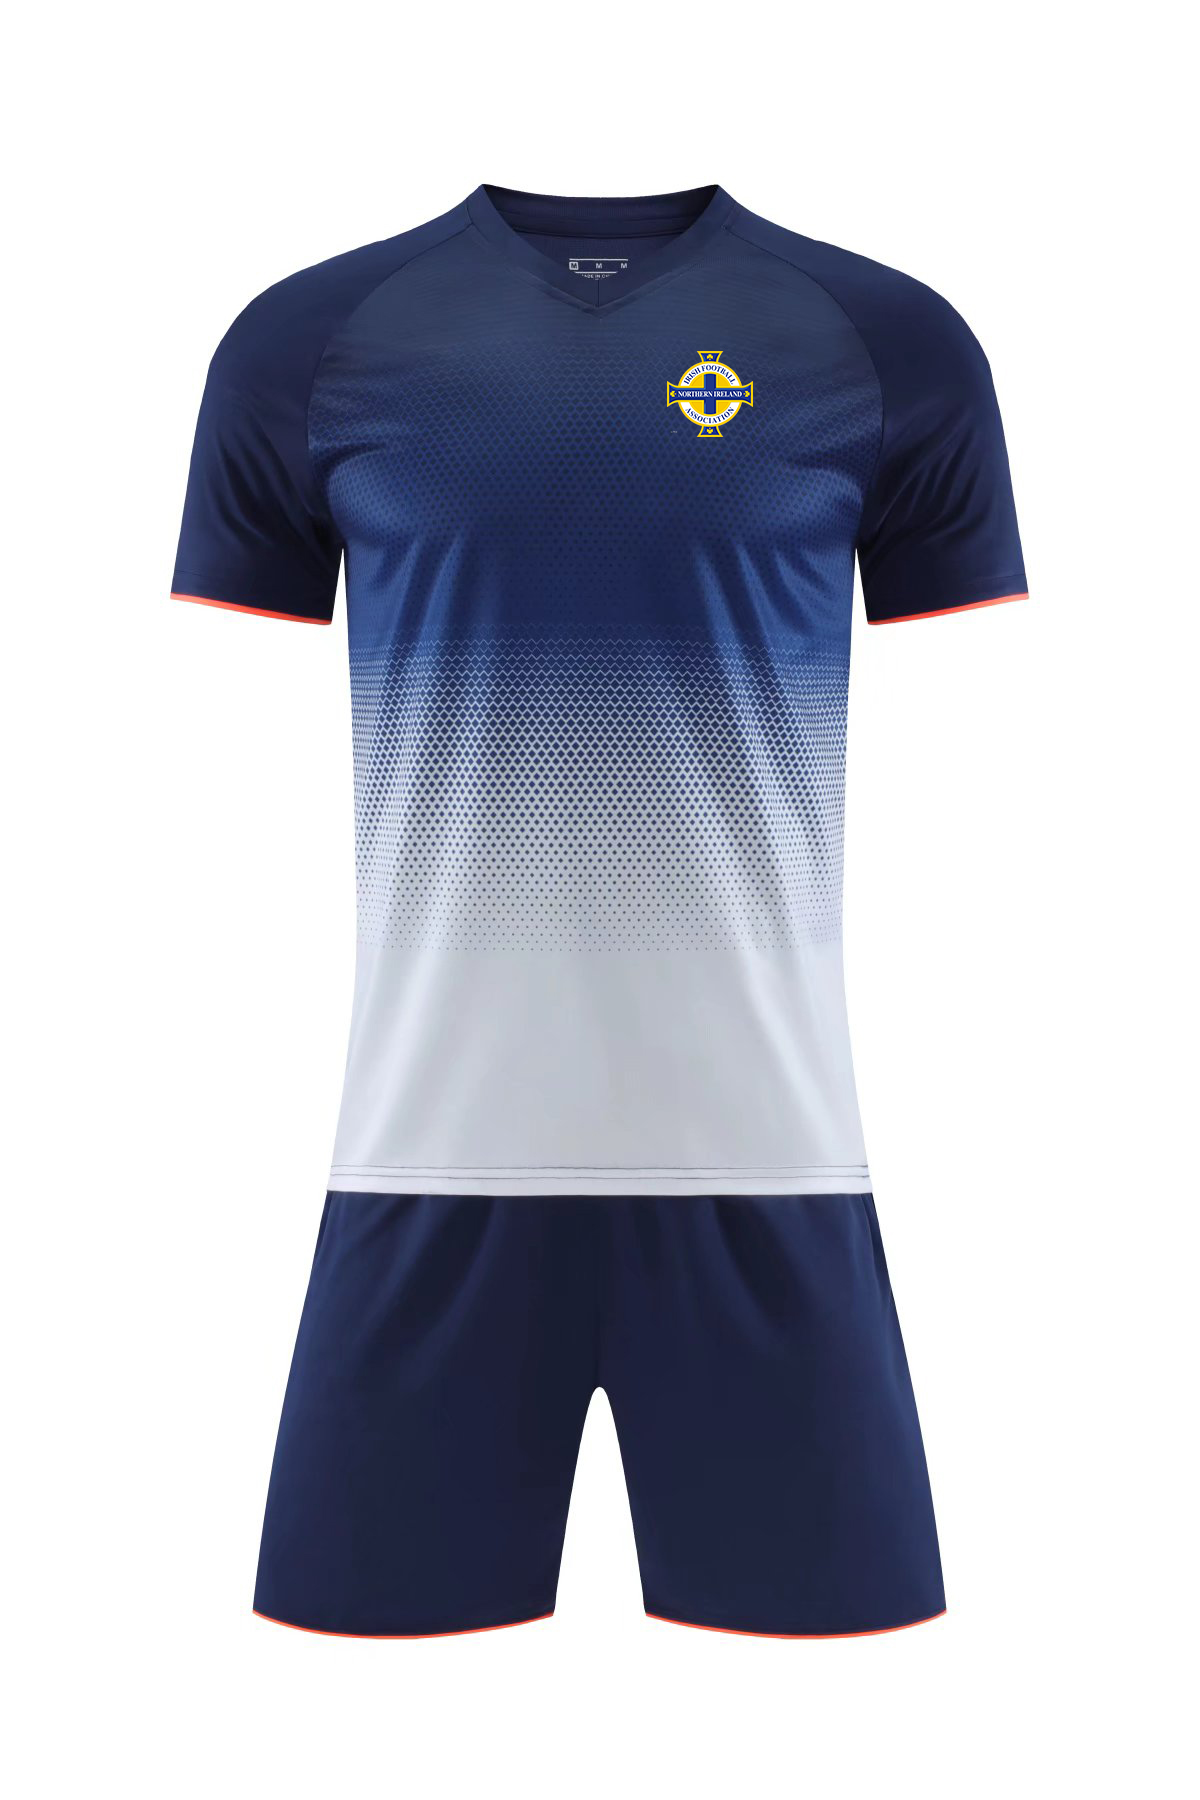 

Northern Ireland national football team Men's Tracksuits Summer short sleeve football training suit jogging breathable T-shirt fan shirt, No 3